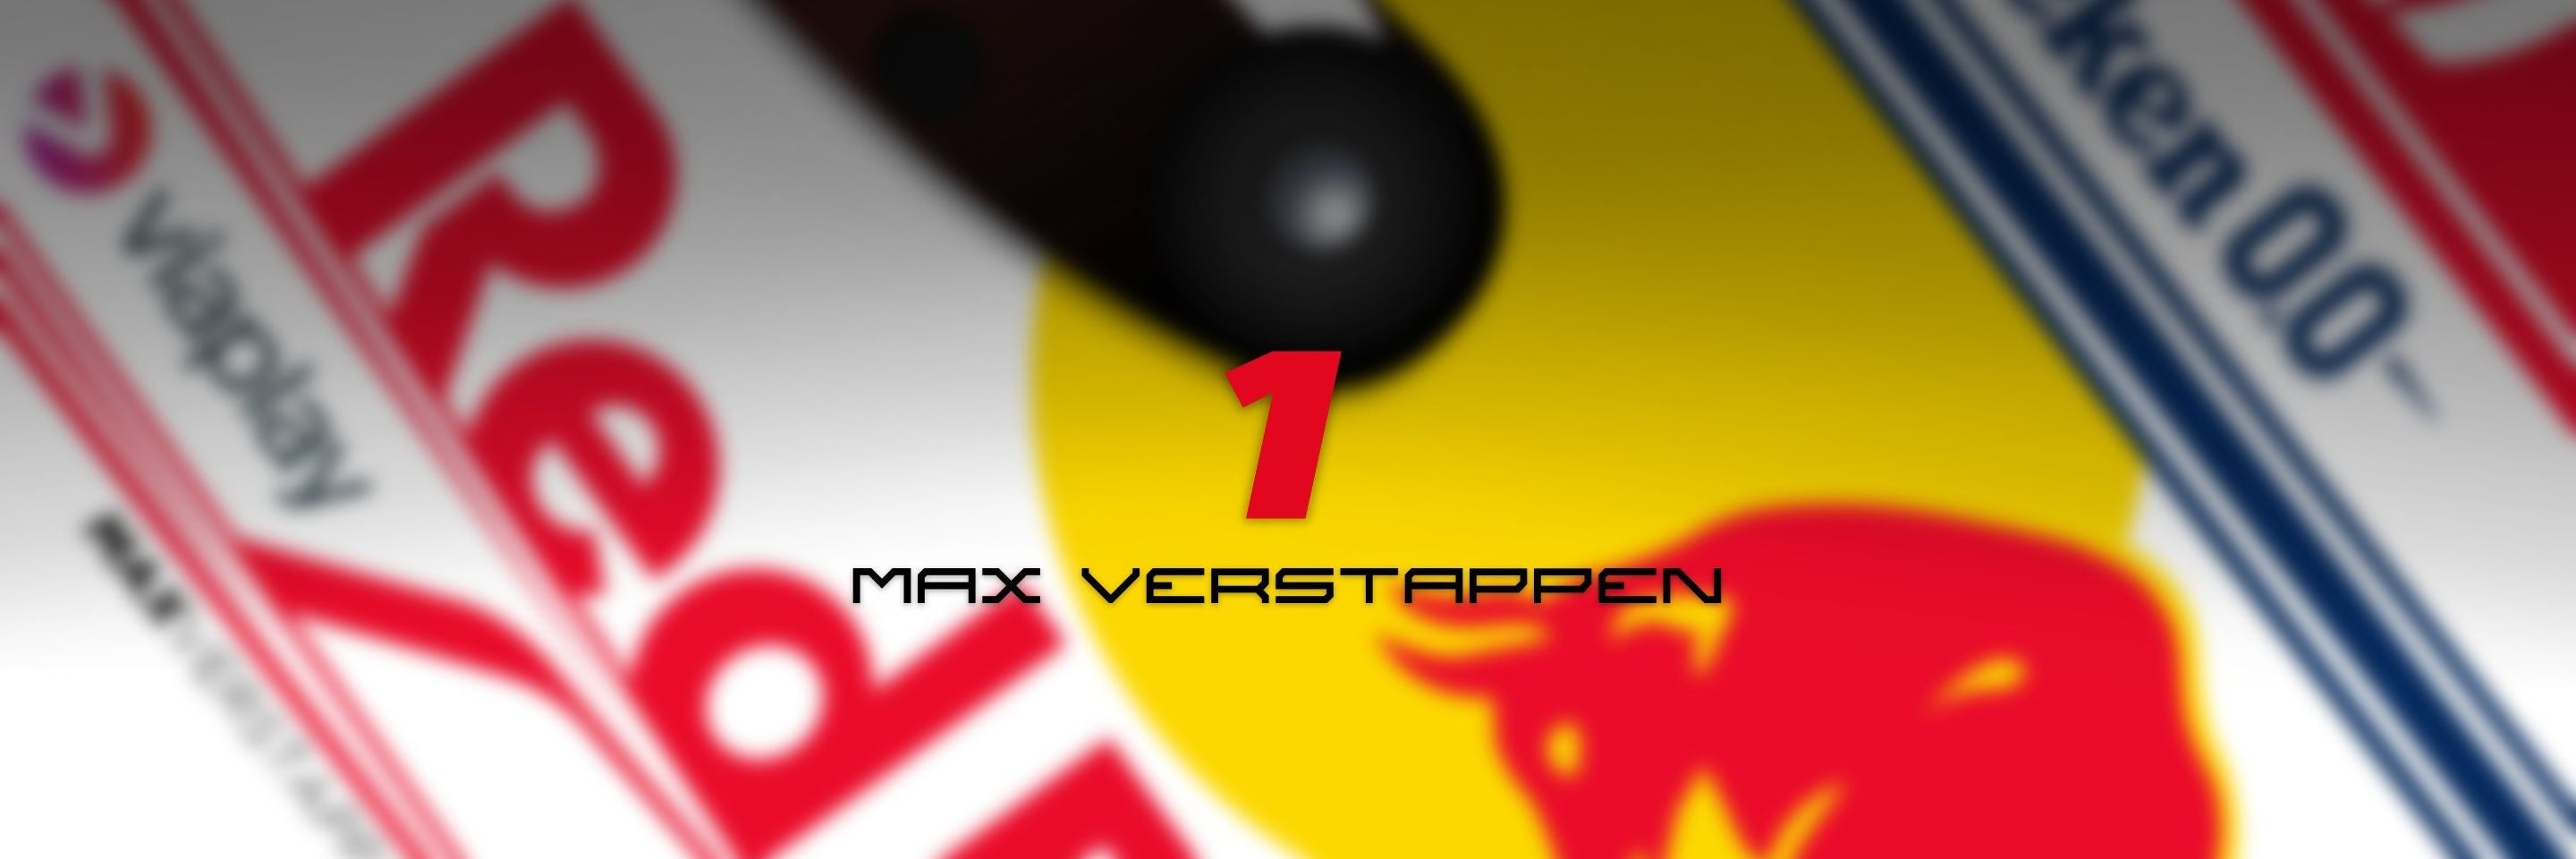 Red Bull Racing F1 Max Verstappen Driver Hoodie - Exotic Orange